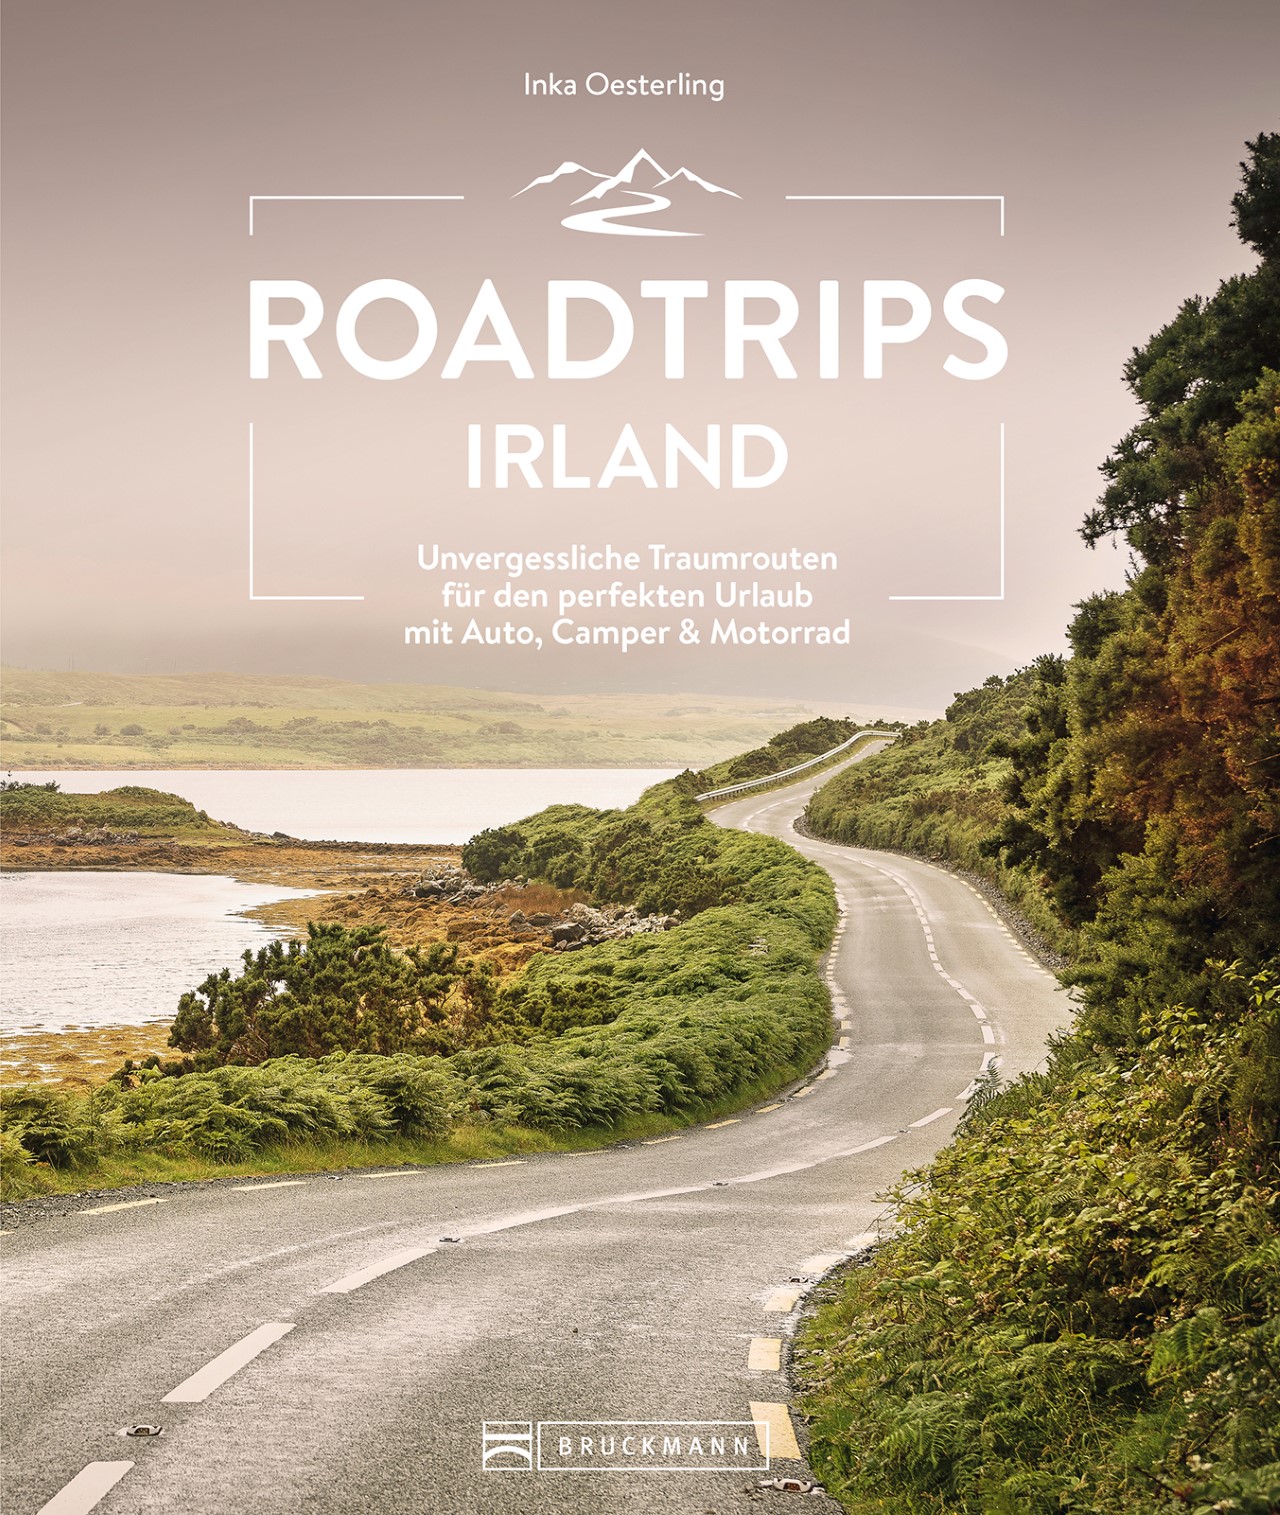 Foto: Roadtrips Irland.